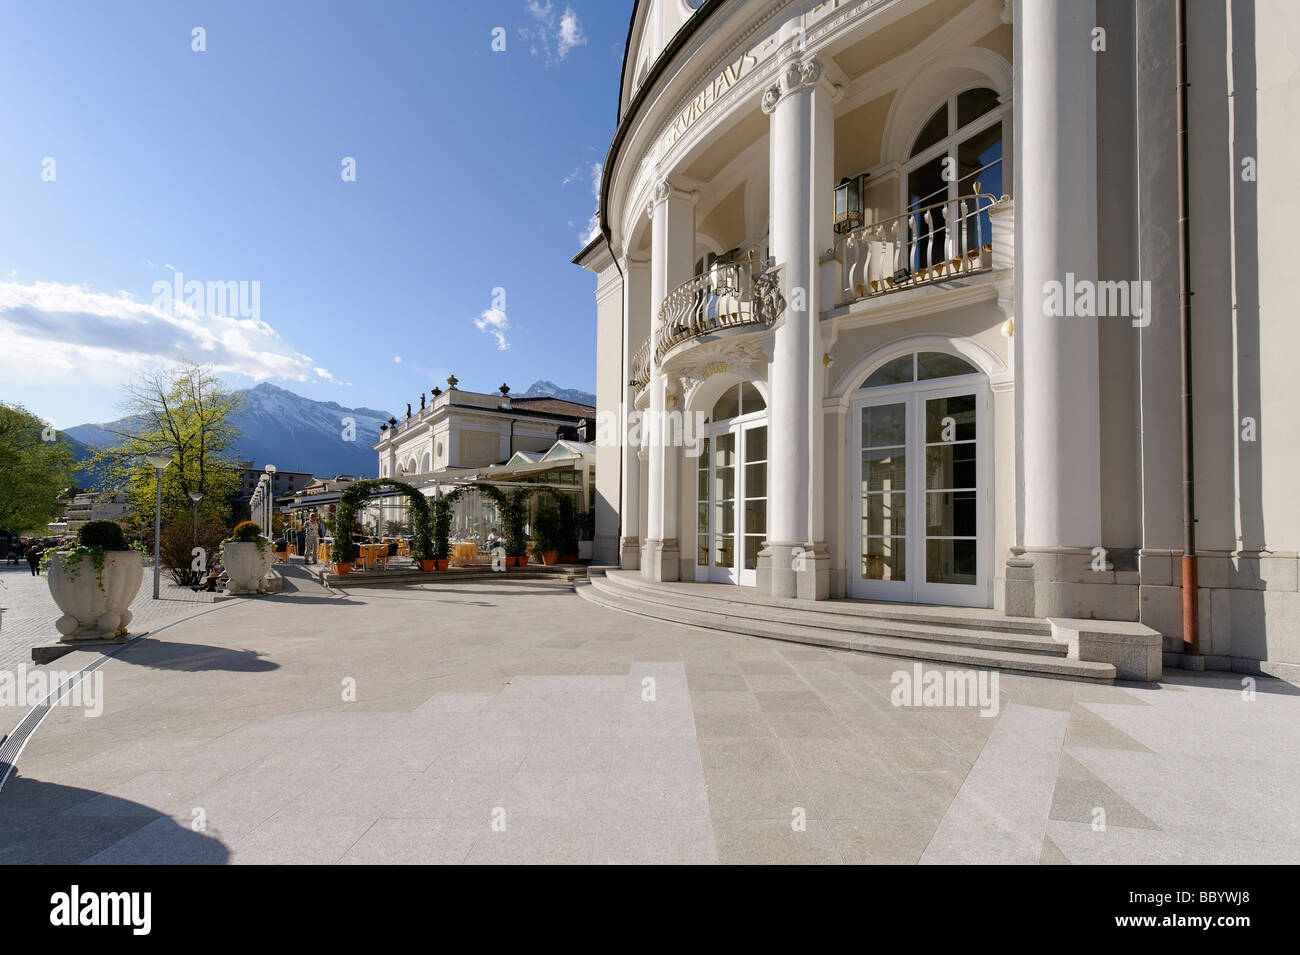 Old city with spa house and promenade, Meran, Merano, South Tyrol, Italy, Europe Stock Photo